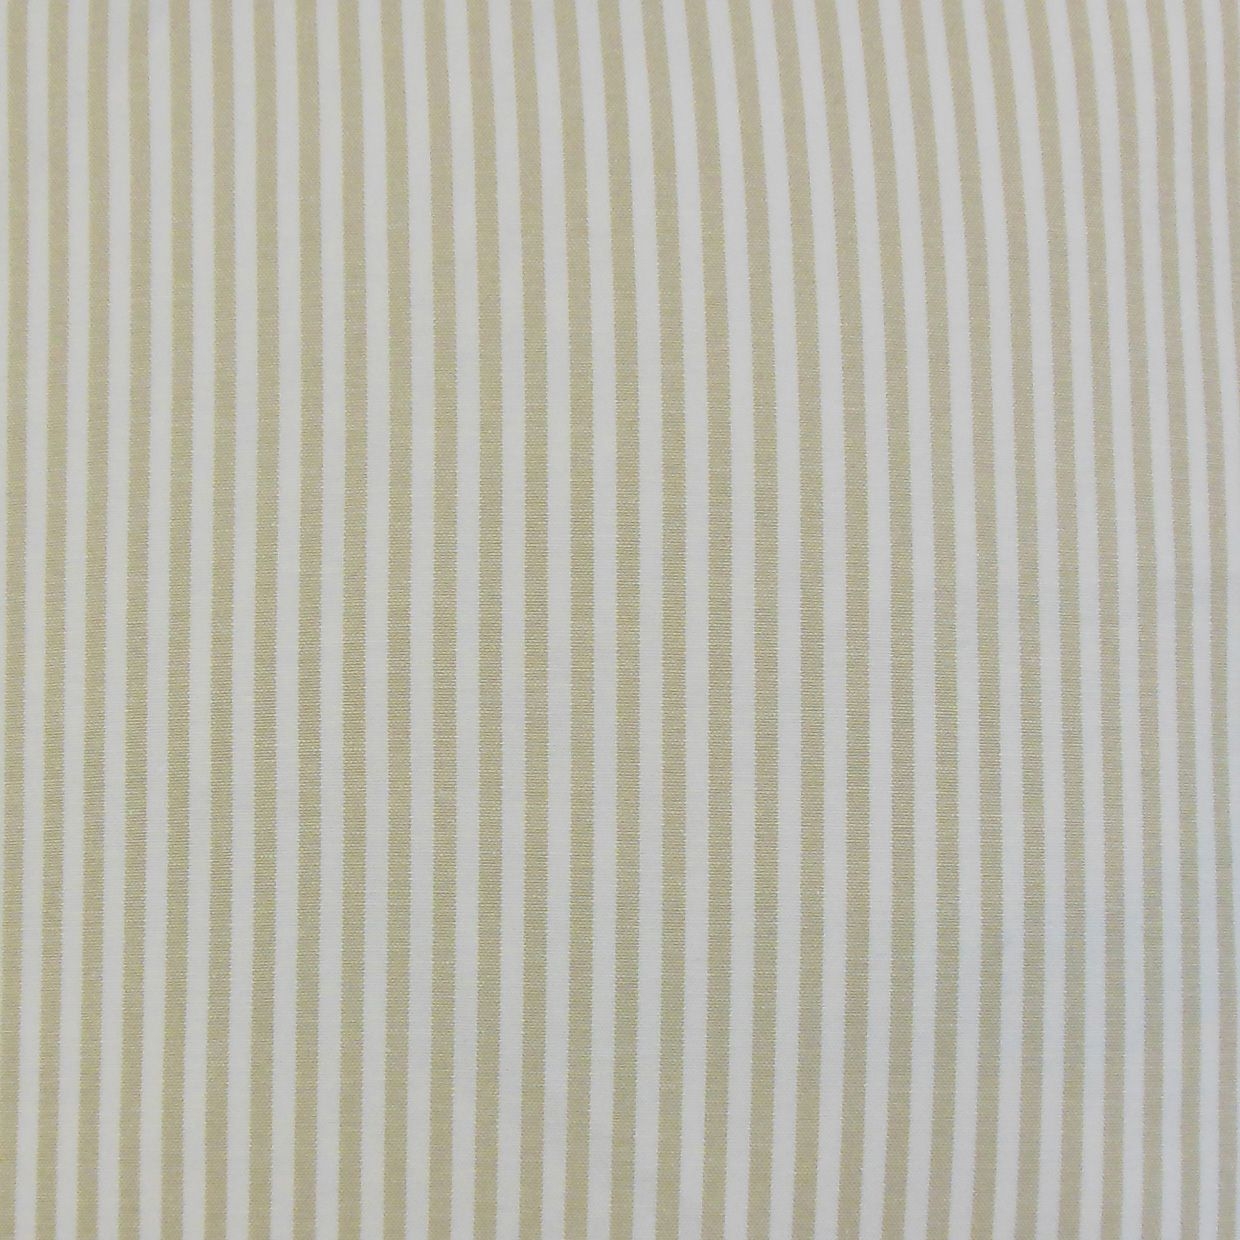 Classic Stripe Pillow, Beige, 22" x 22" - Image 1